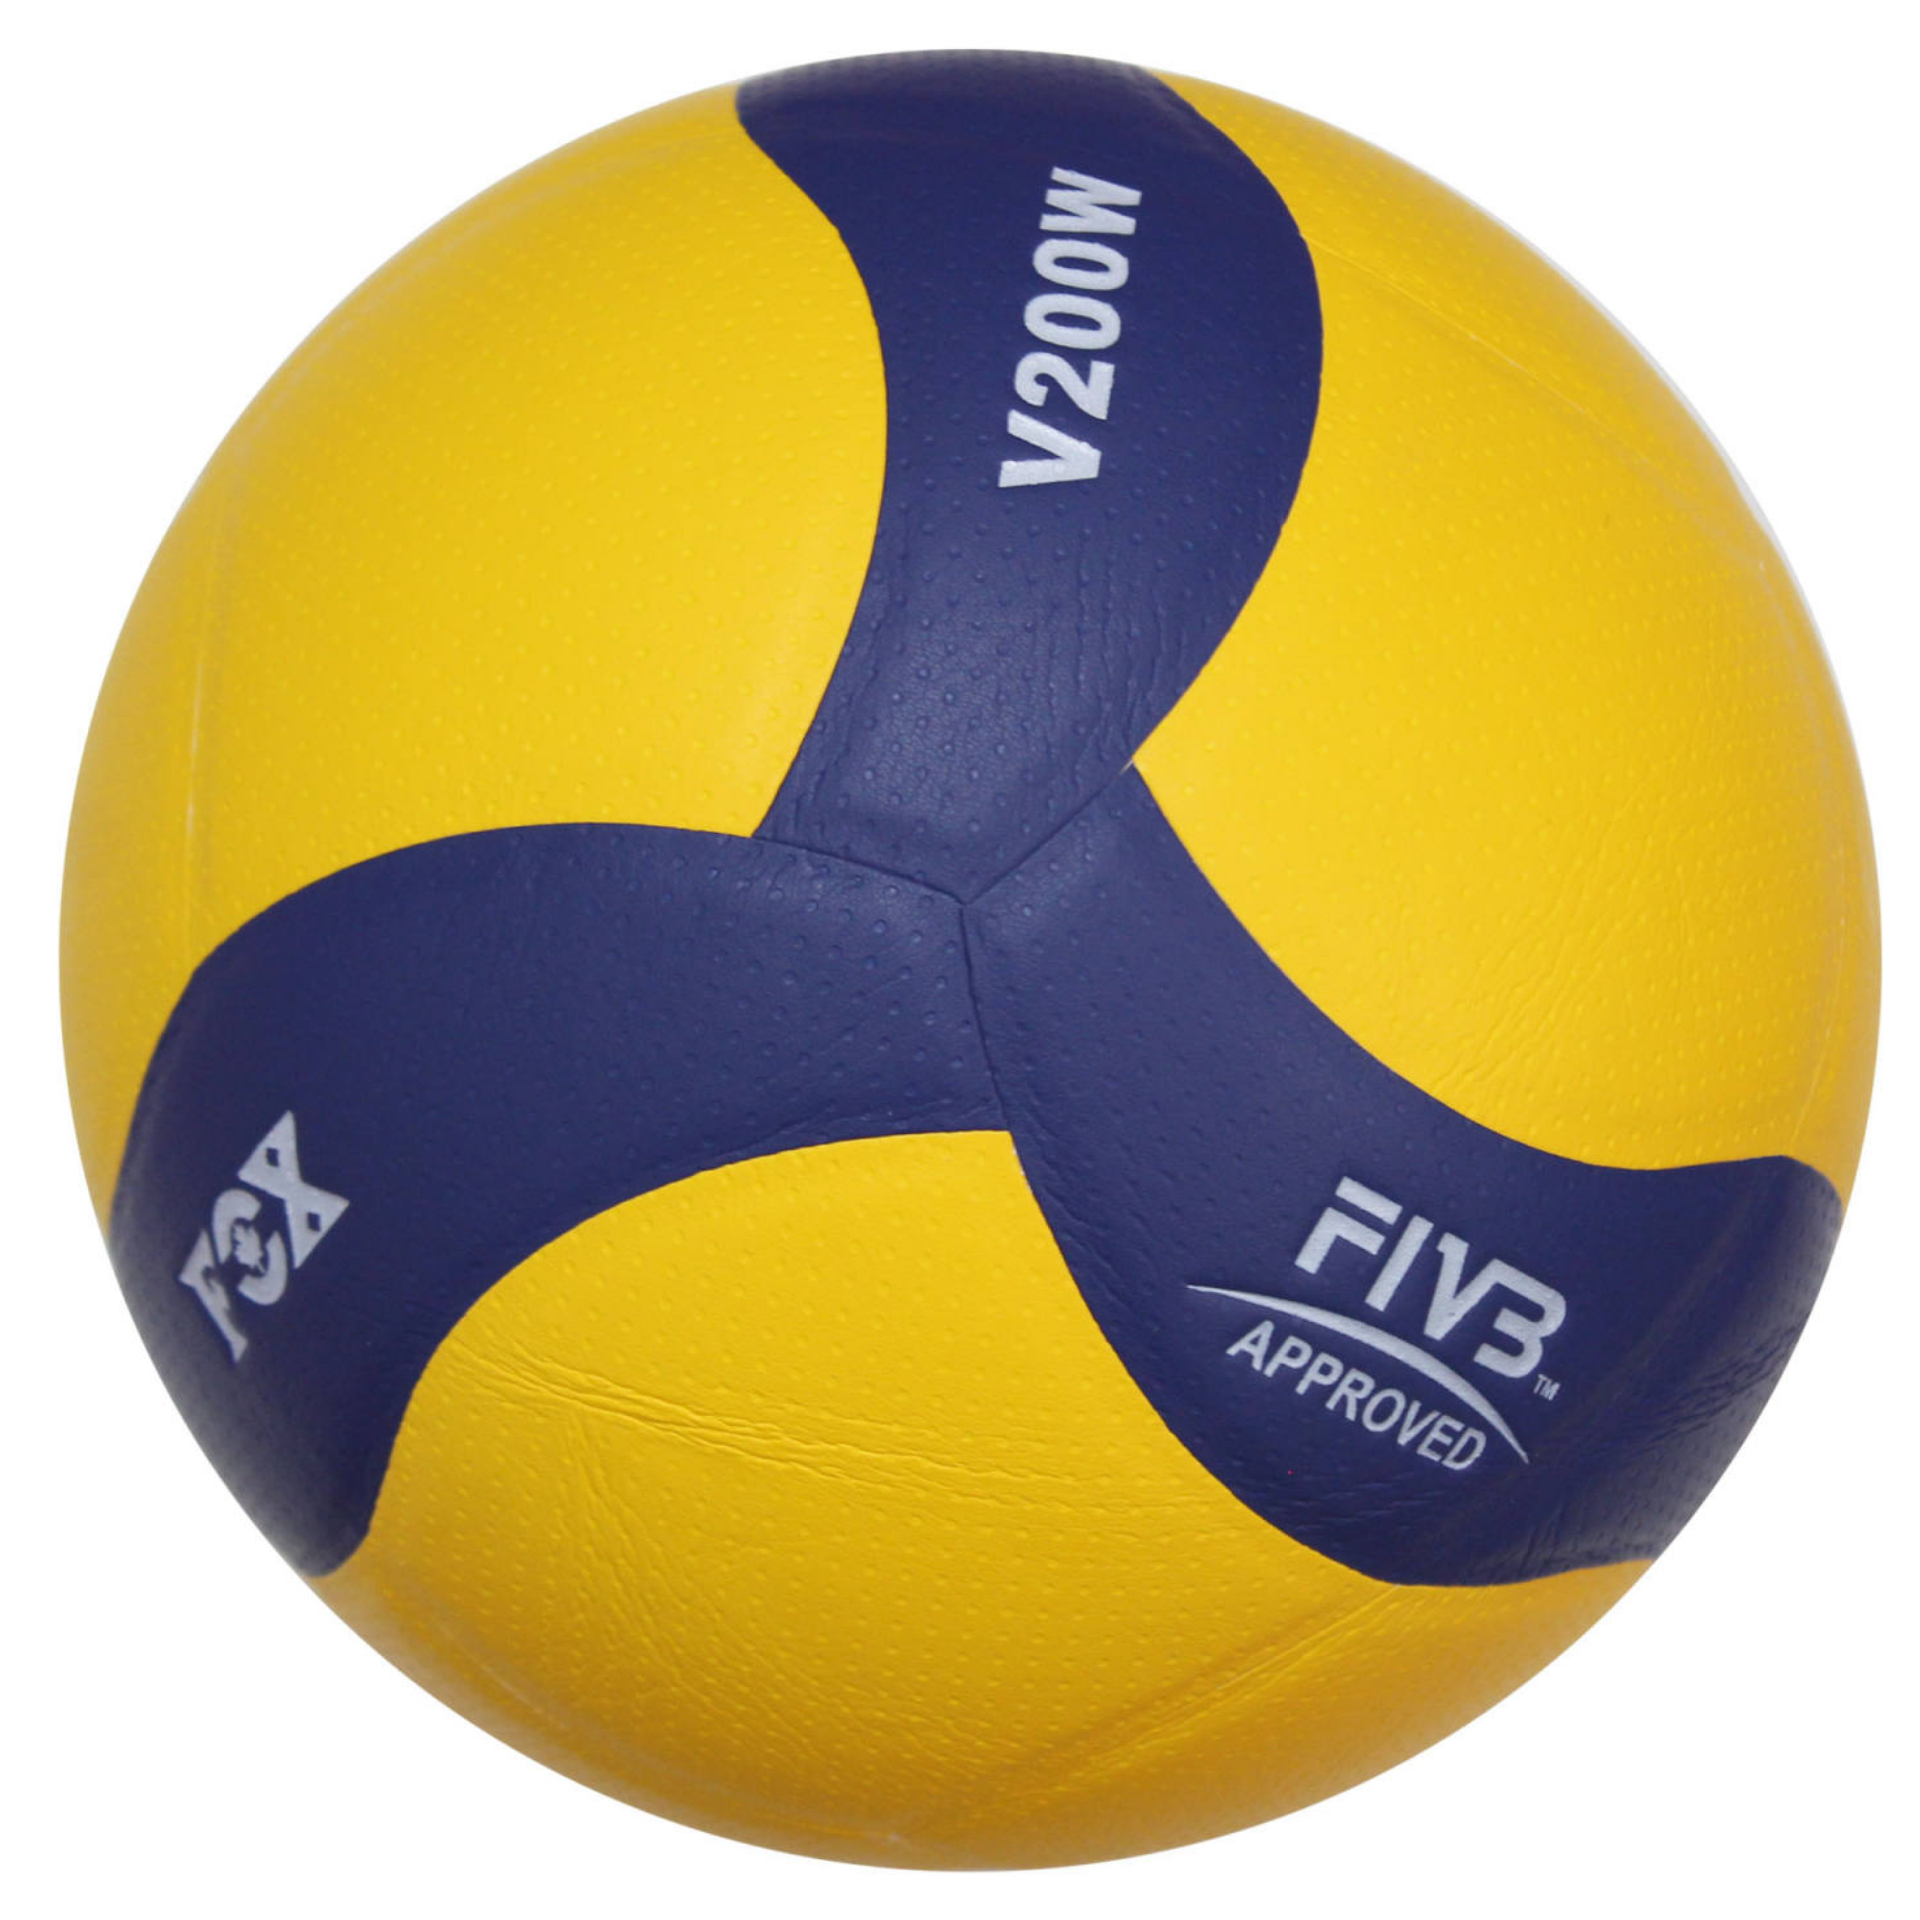 توپ والیبال مدل F.x v200w